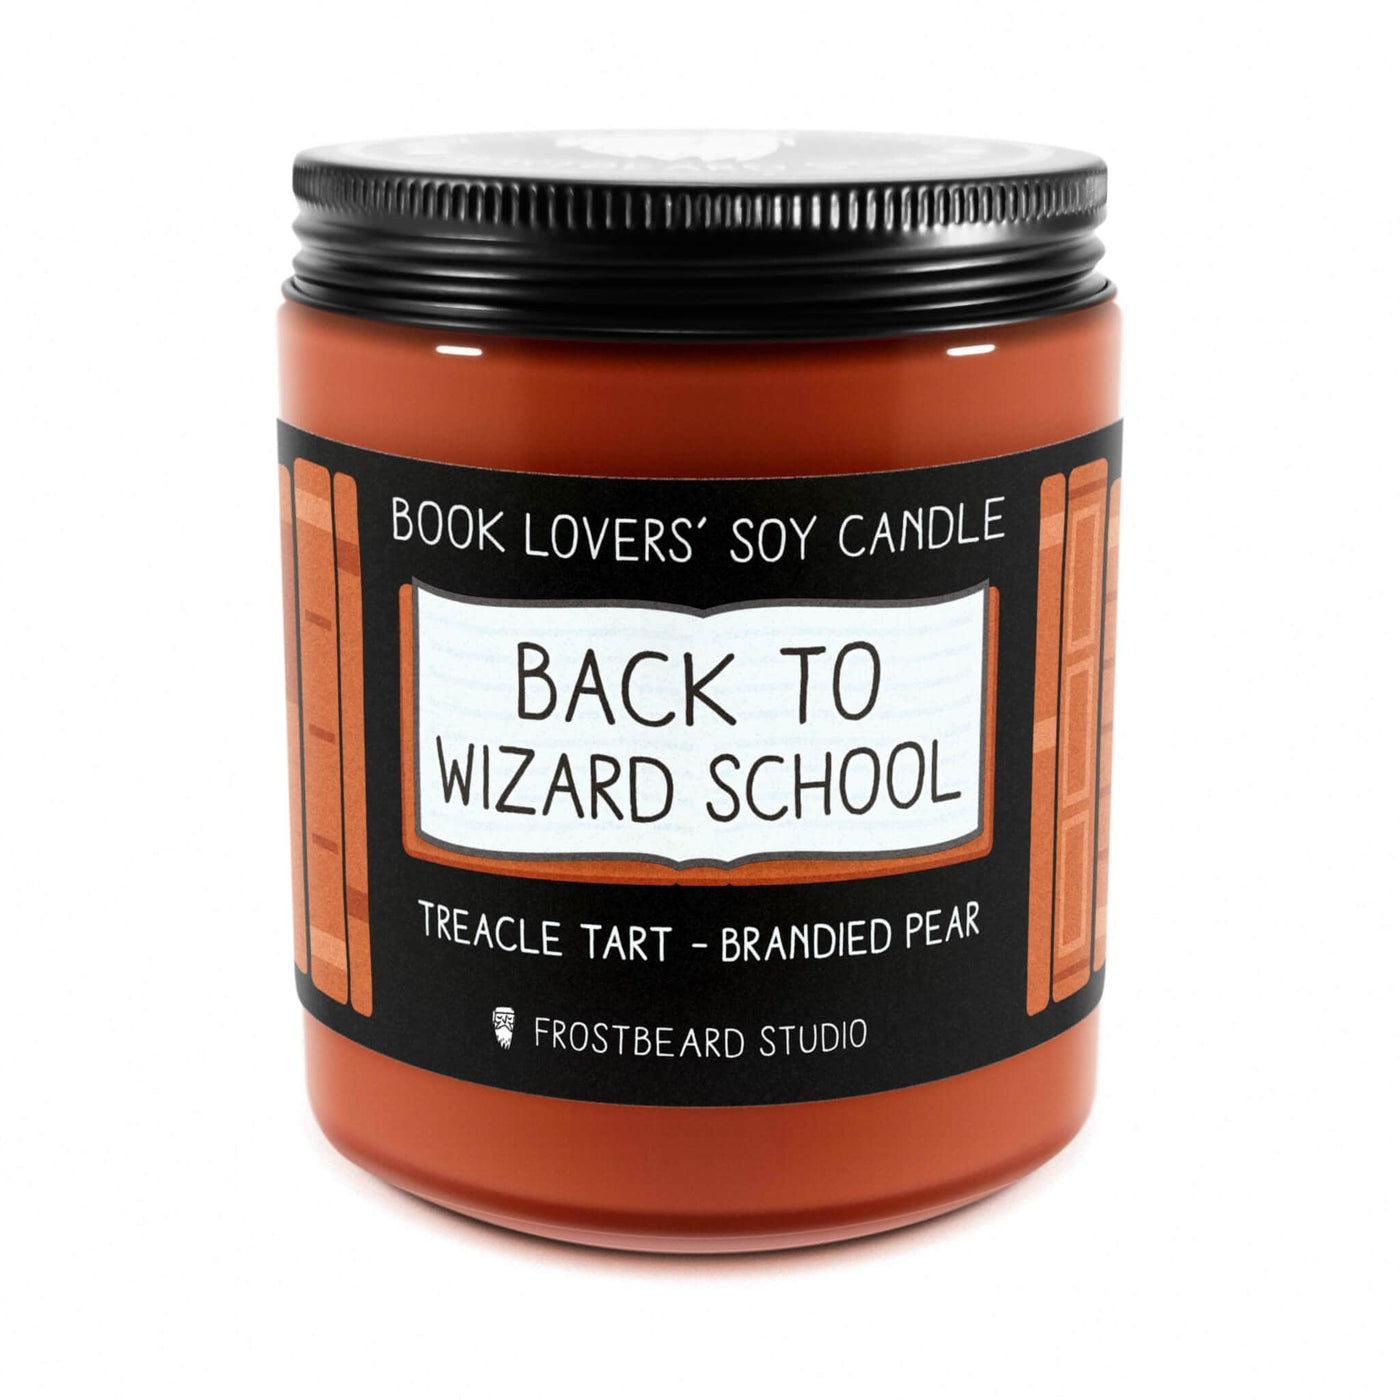 Back to Wizard School  -  8 oz Jar  -  Book Lovers' Soy Candle  -  Frostbeard Studio